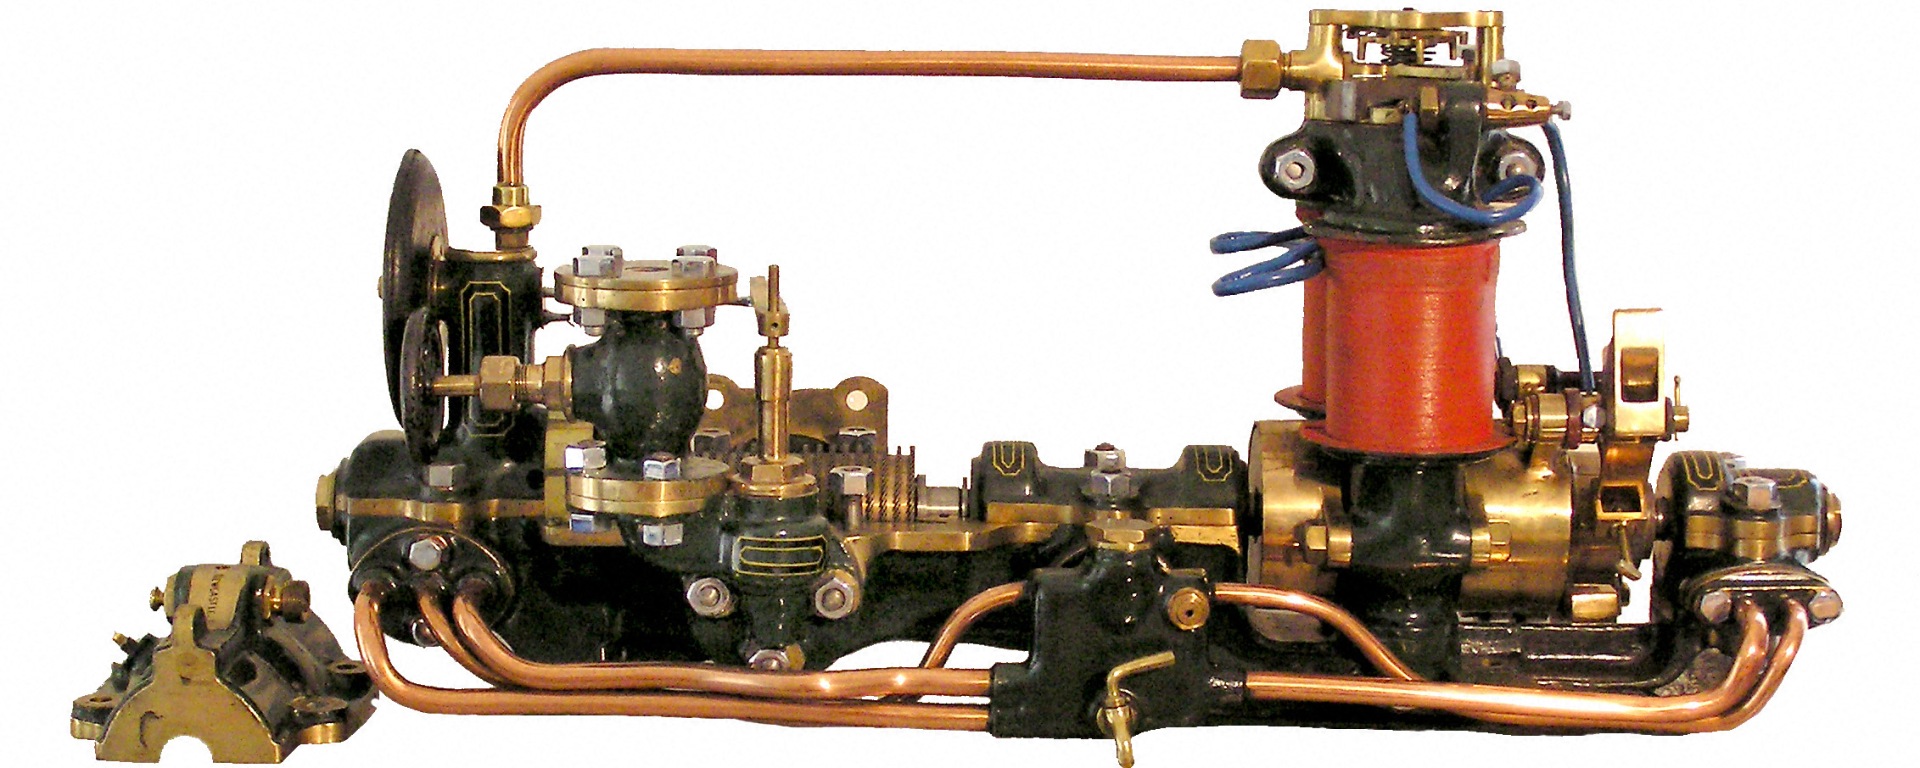 Parsons 5kw turbogenerator set model, c1880